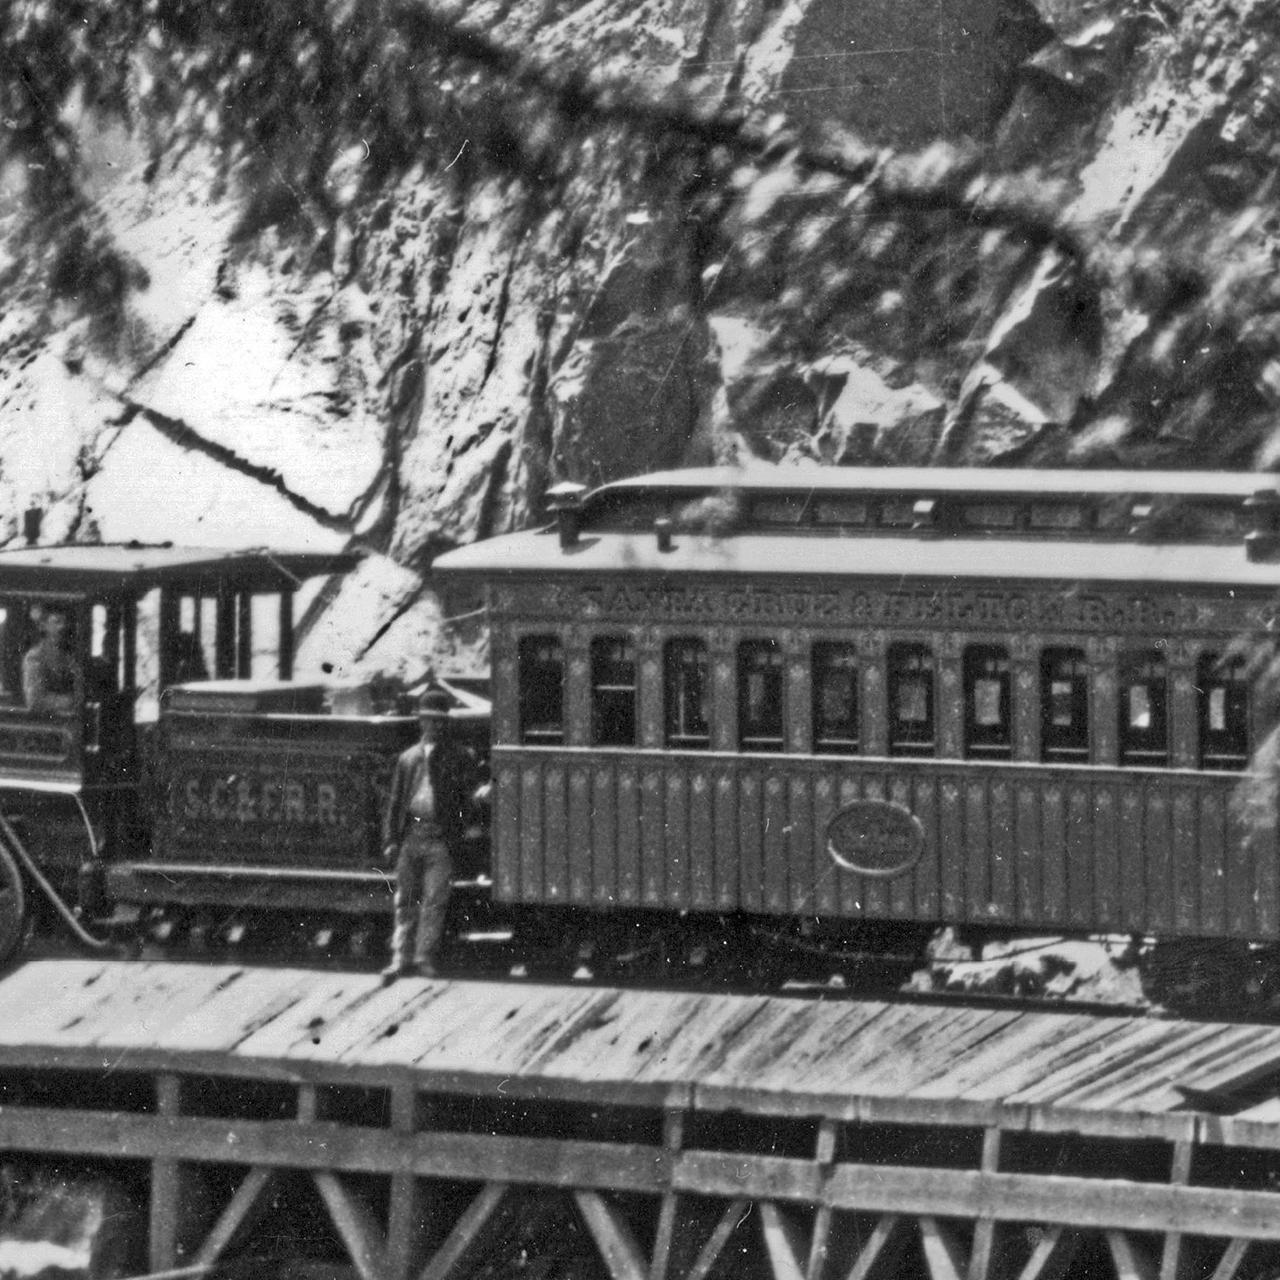 SC&F locomotive and smoker, ca 1878